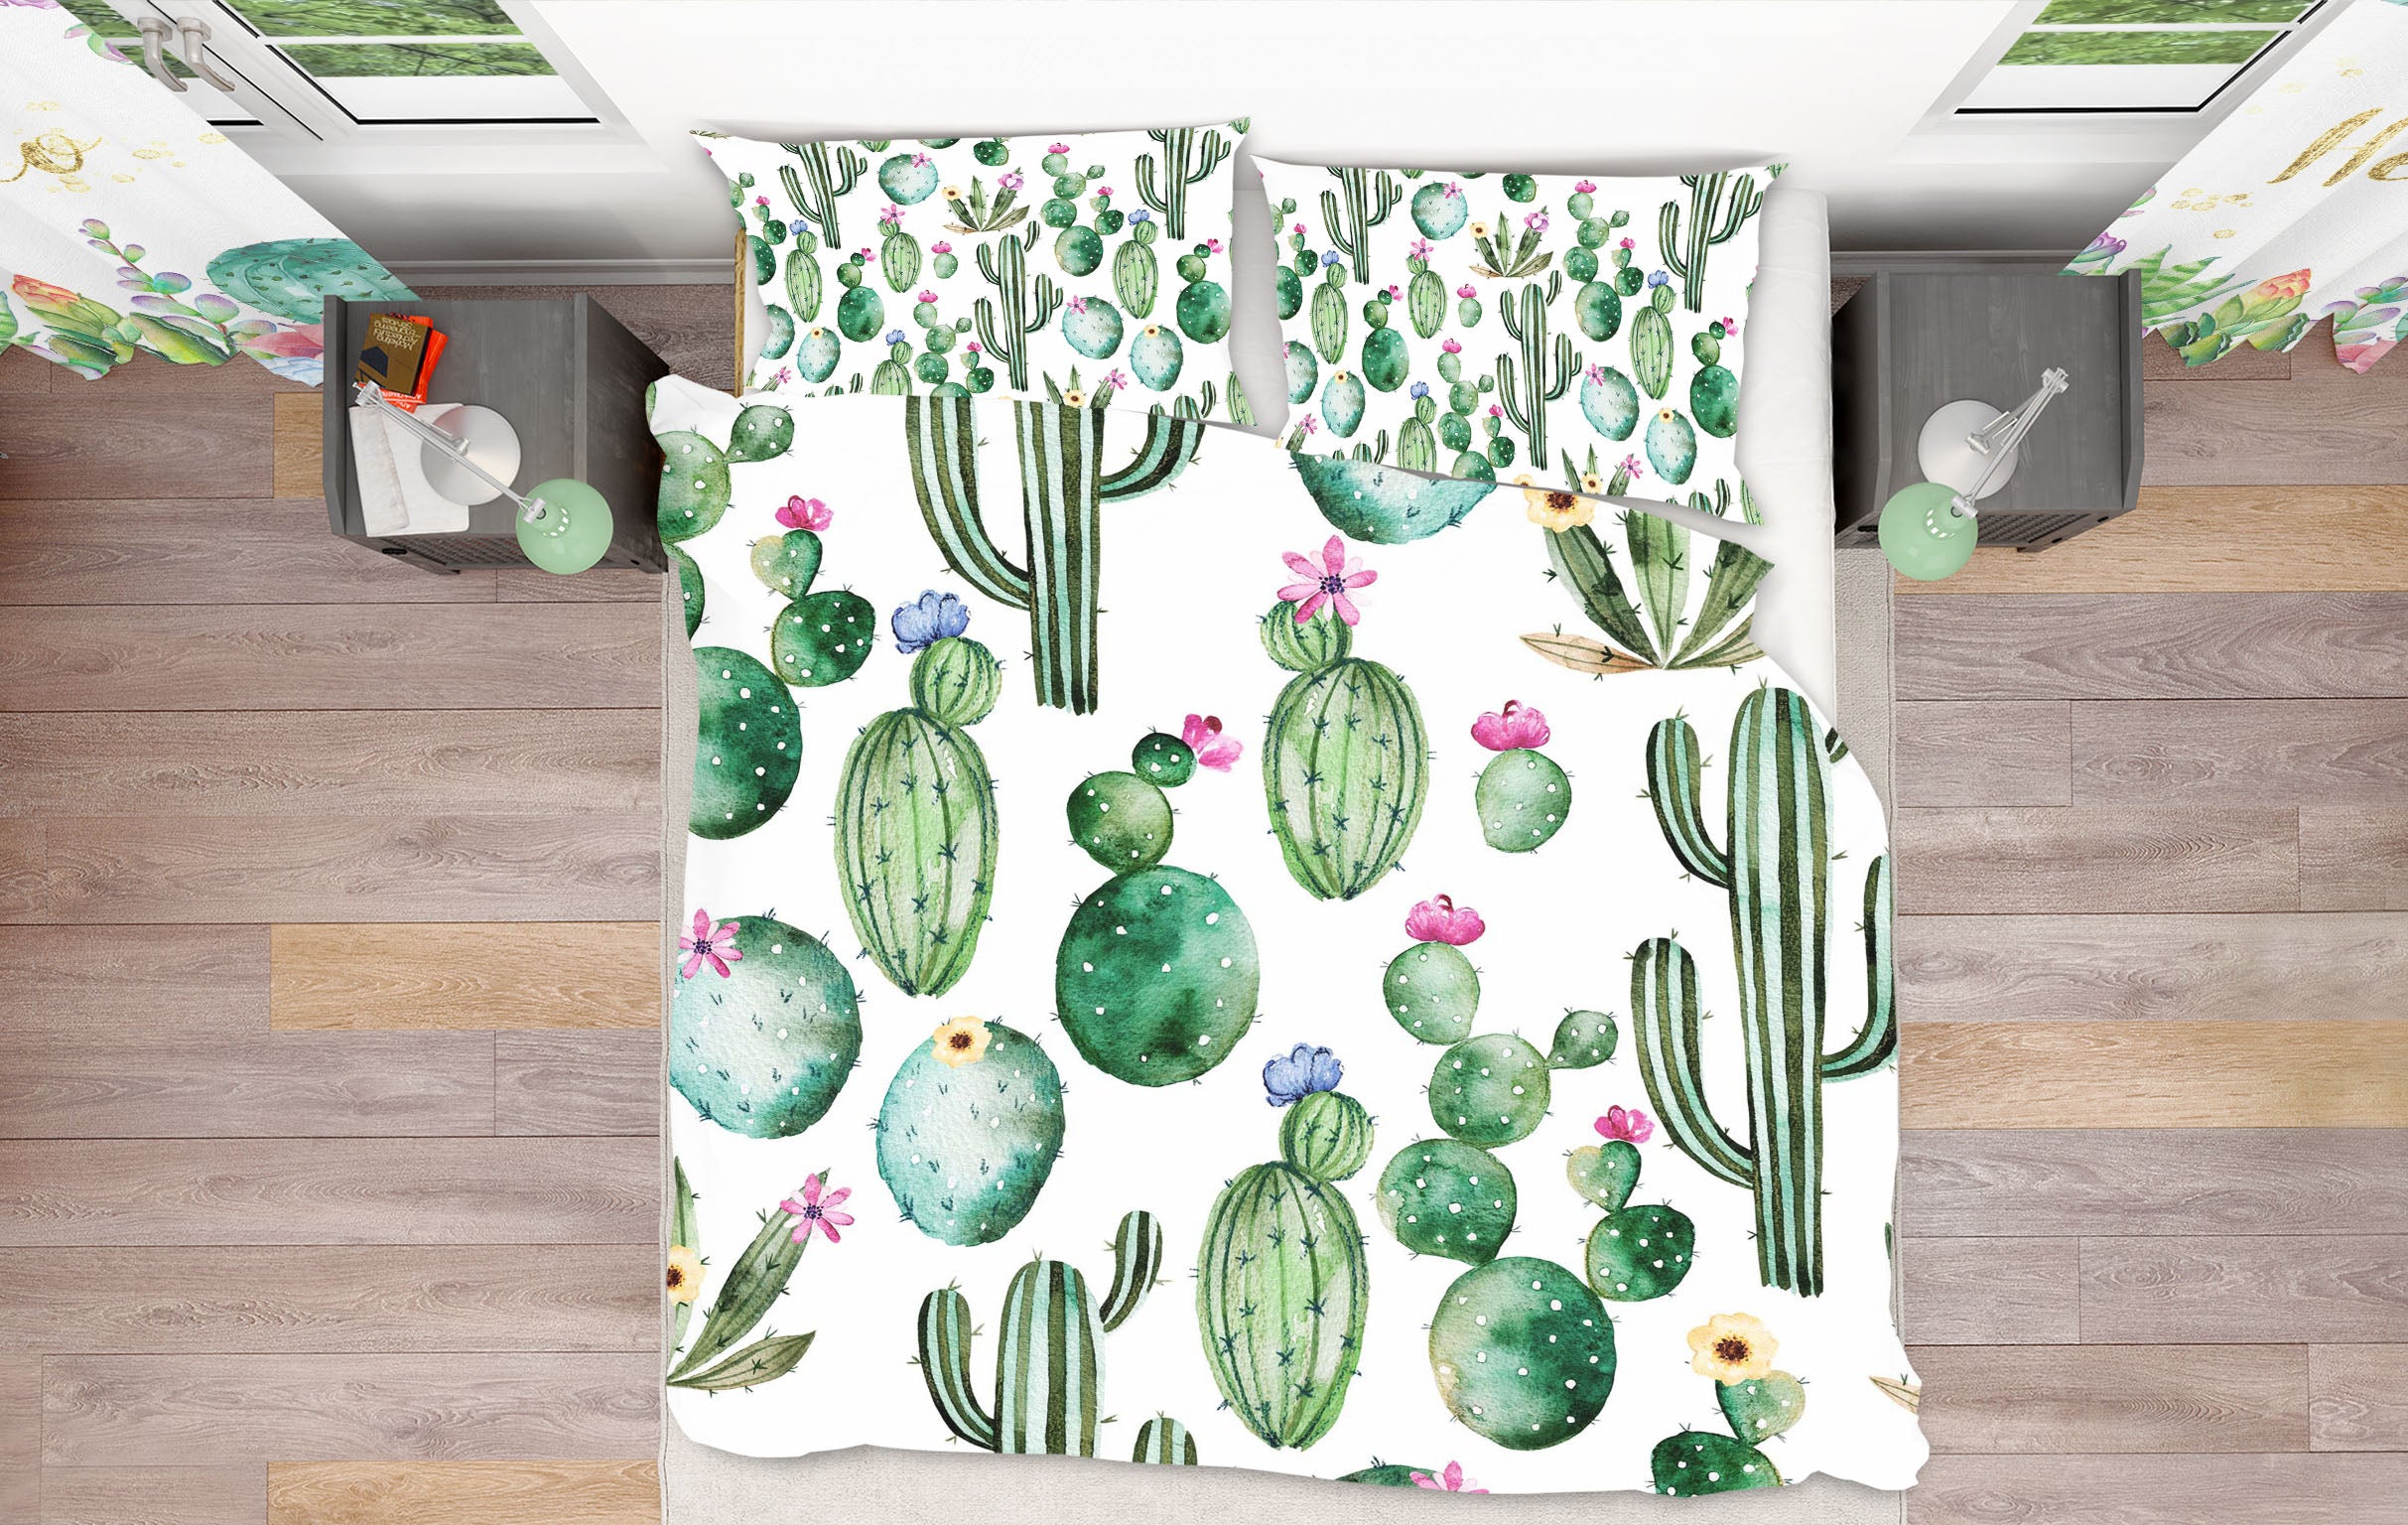 3D Green Cactus Thorn 085 Uta Naumann Bedding Bed Pillowcases Quilt